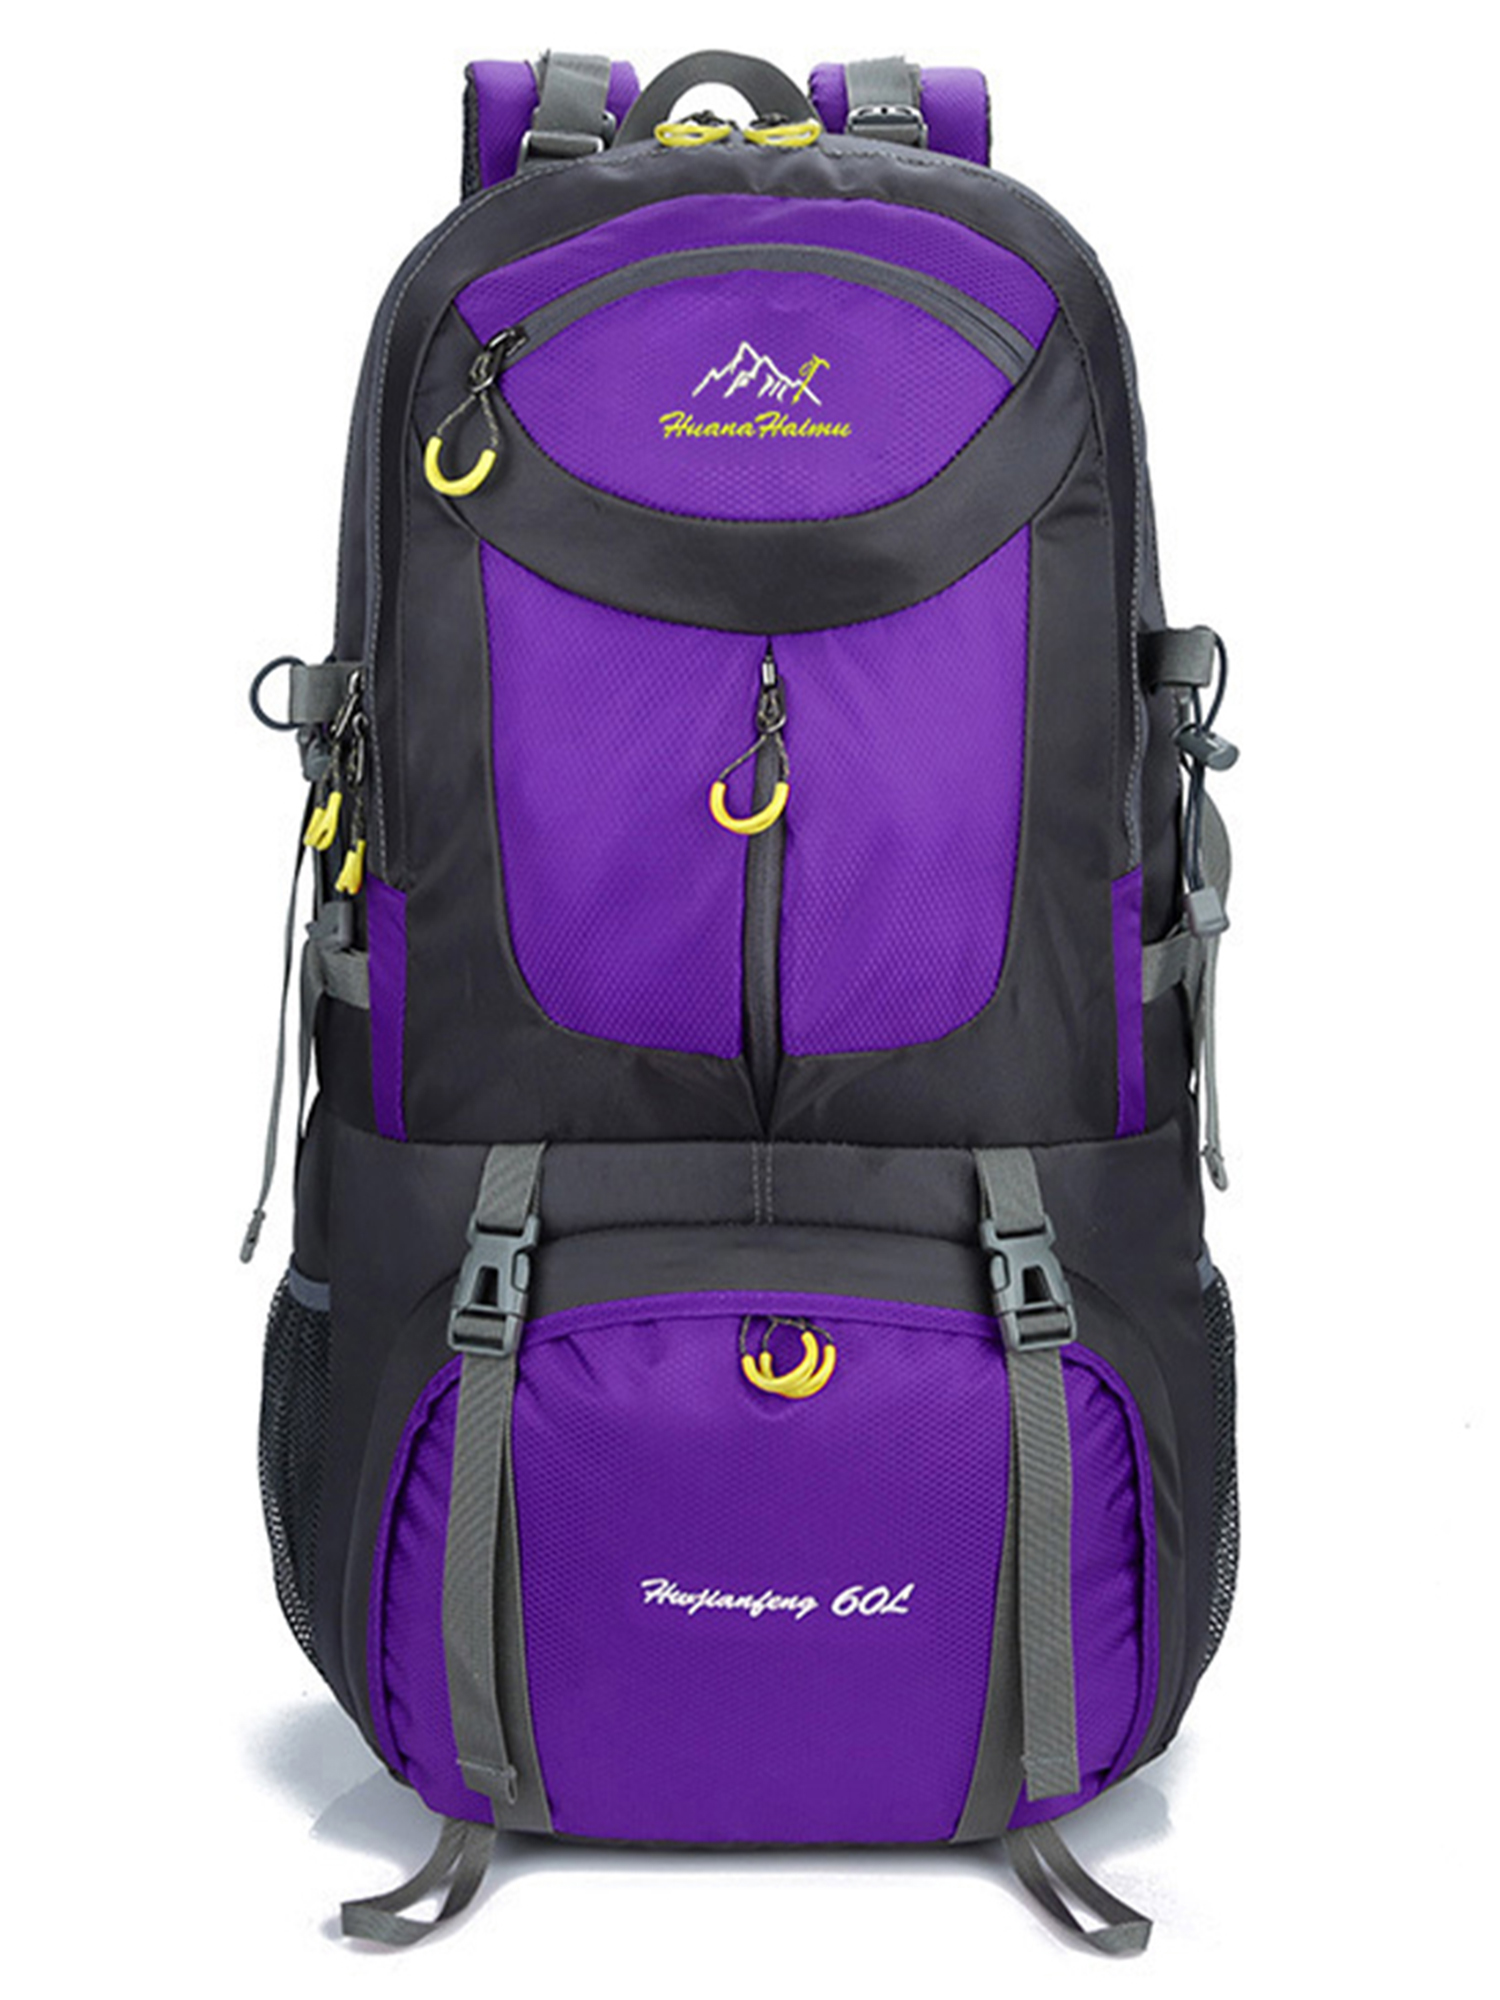 Glonme Men Travel Backpack Large Capacity Hiking Backpacks Multi Pockets Waterproof Rucksack Multipurpose Boys Lightweight Zipper Durable Anti Theft Purple 60L - image 1 of 3